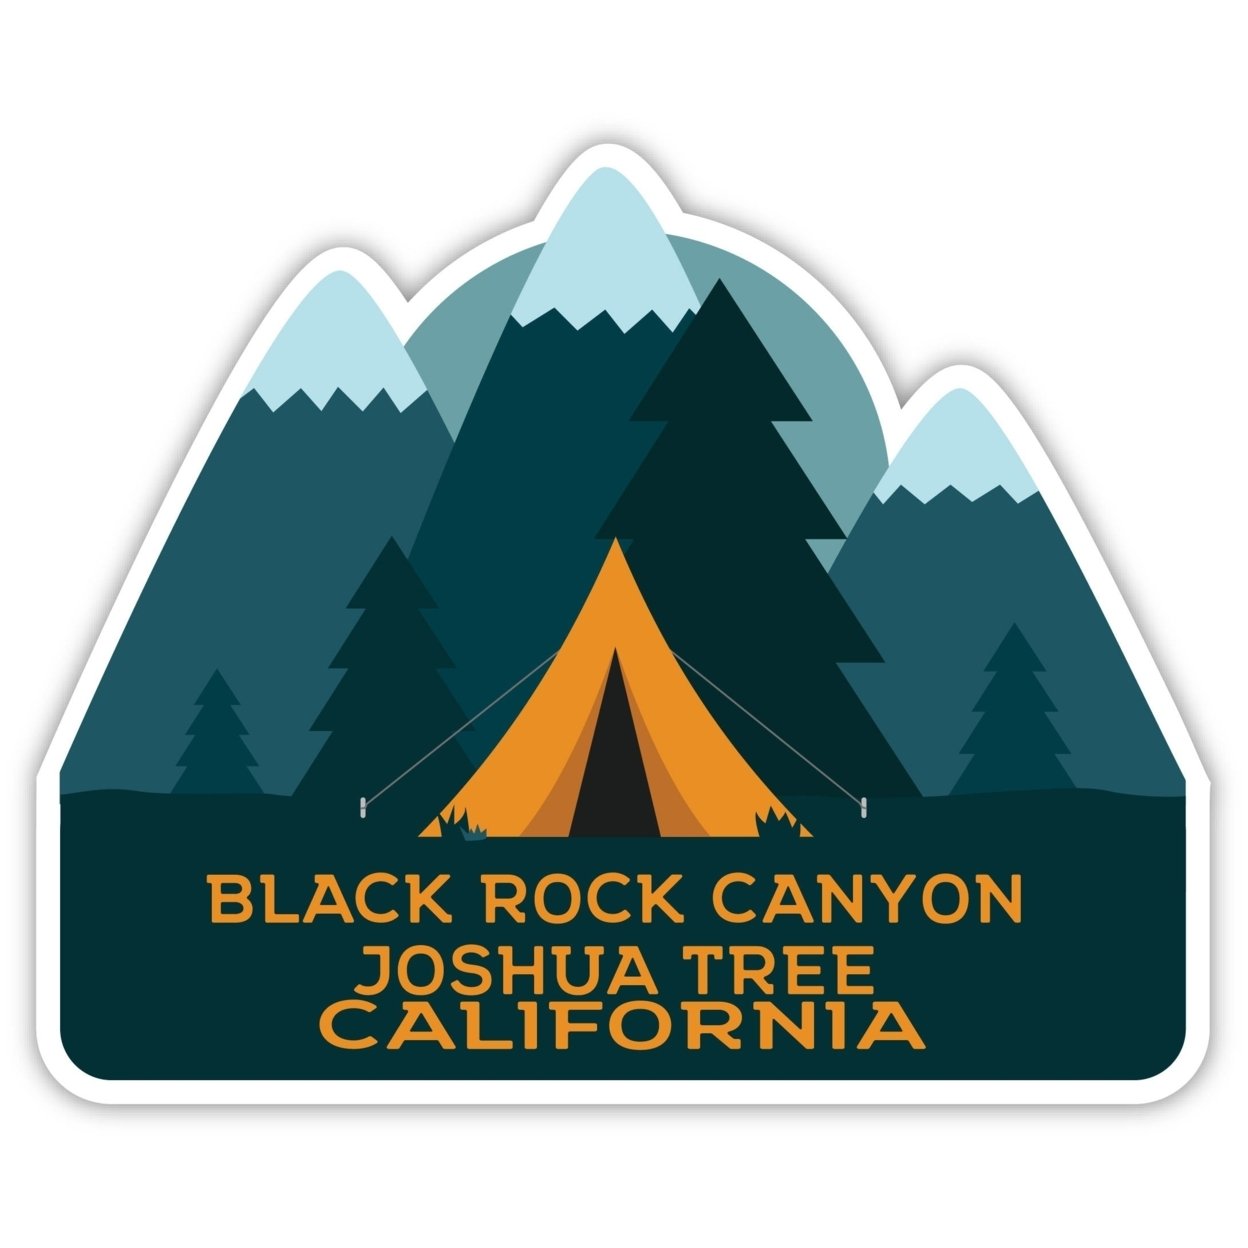 Black Rock Canyon Joshua Tree California Souvenir Decorative Stickers (Choose Theme And Size) - Single Unit, 2-Inch, Tent